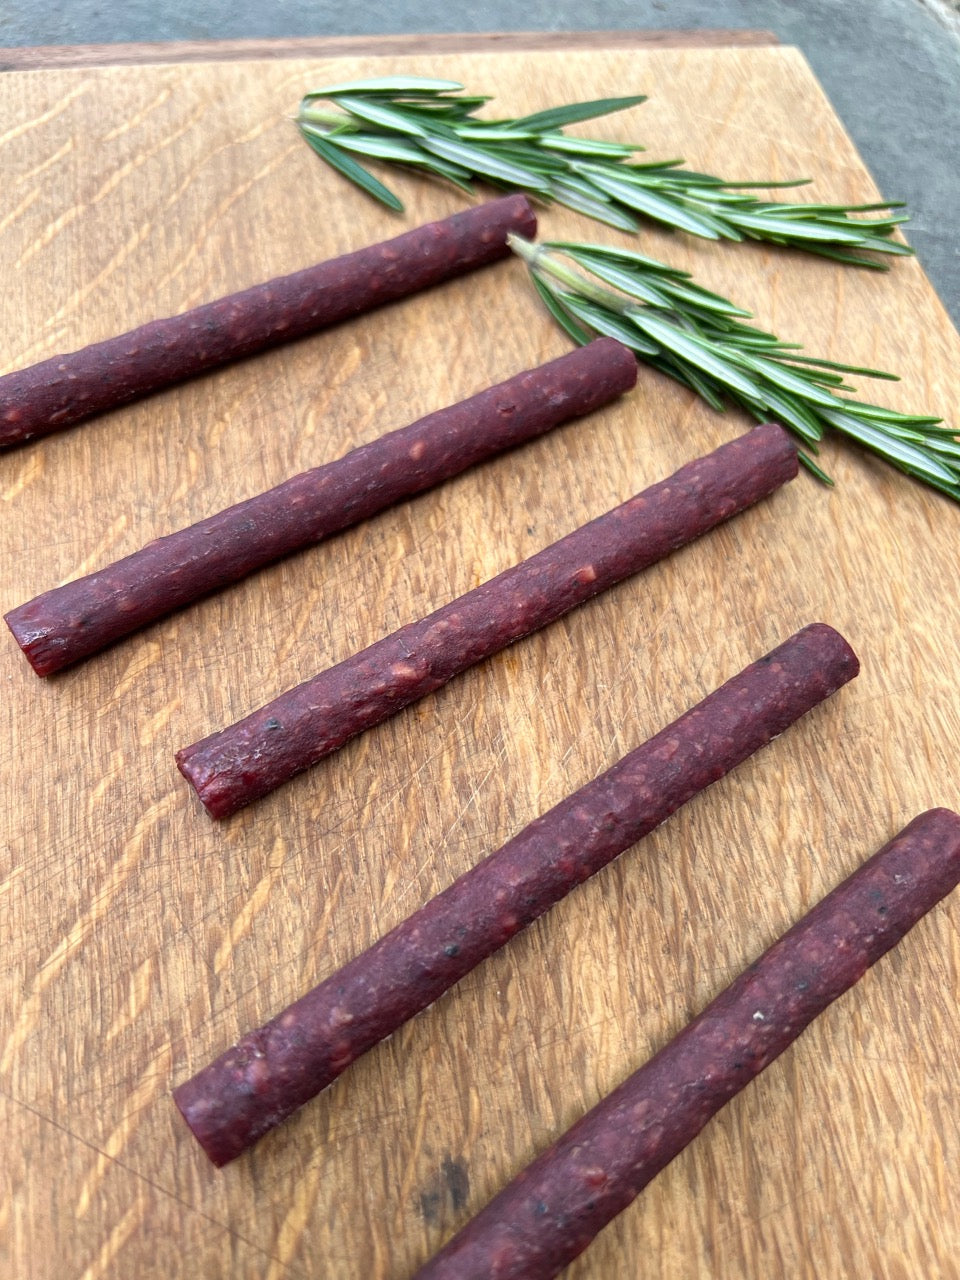 Randall Lineback Skinny Salami™ Beef Sticks: Rosemary Beef Recipe